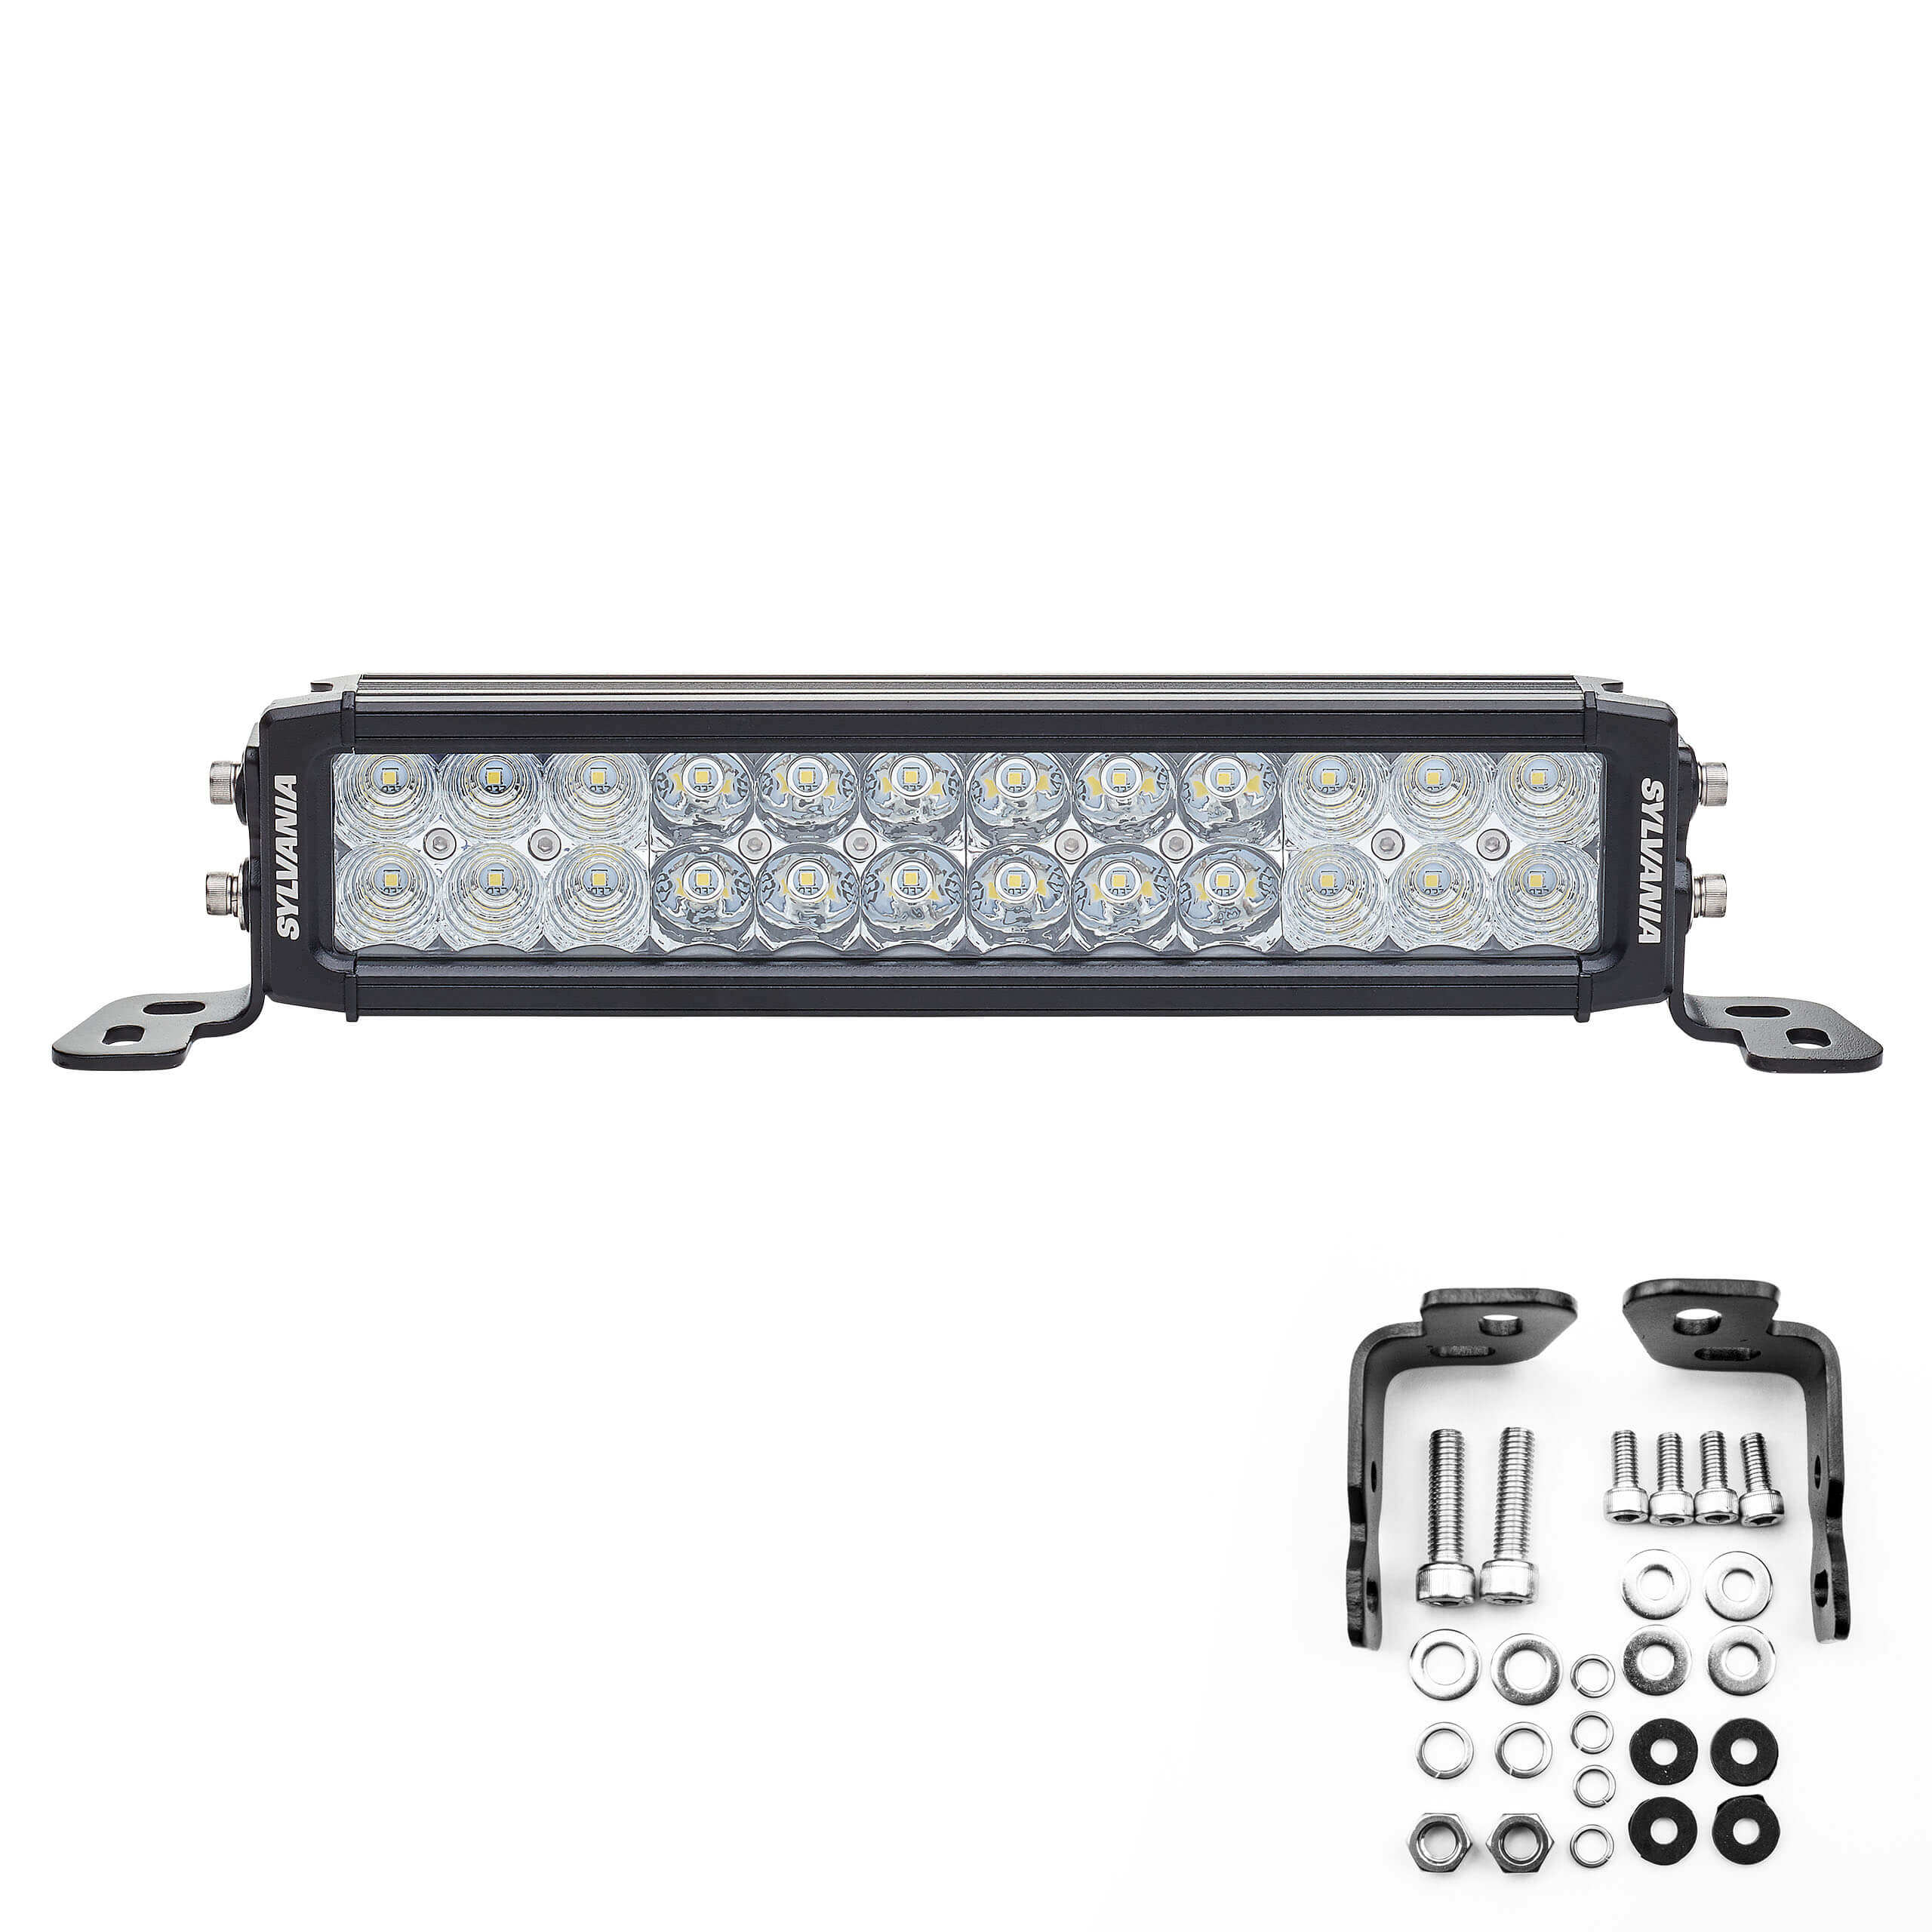 12 LED Combination Spot / Flood Light Bar